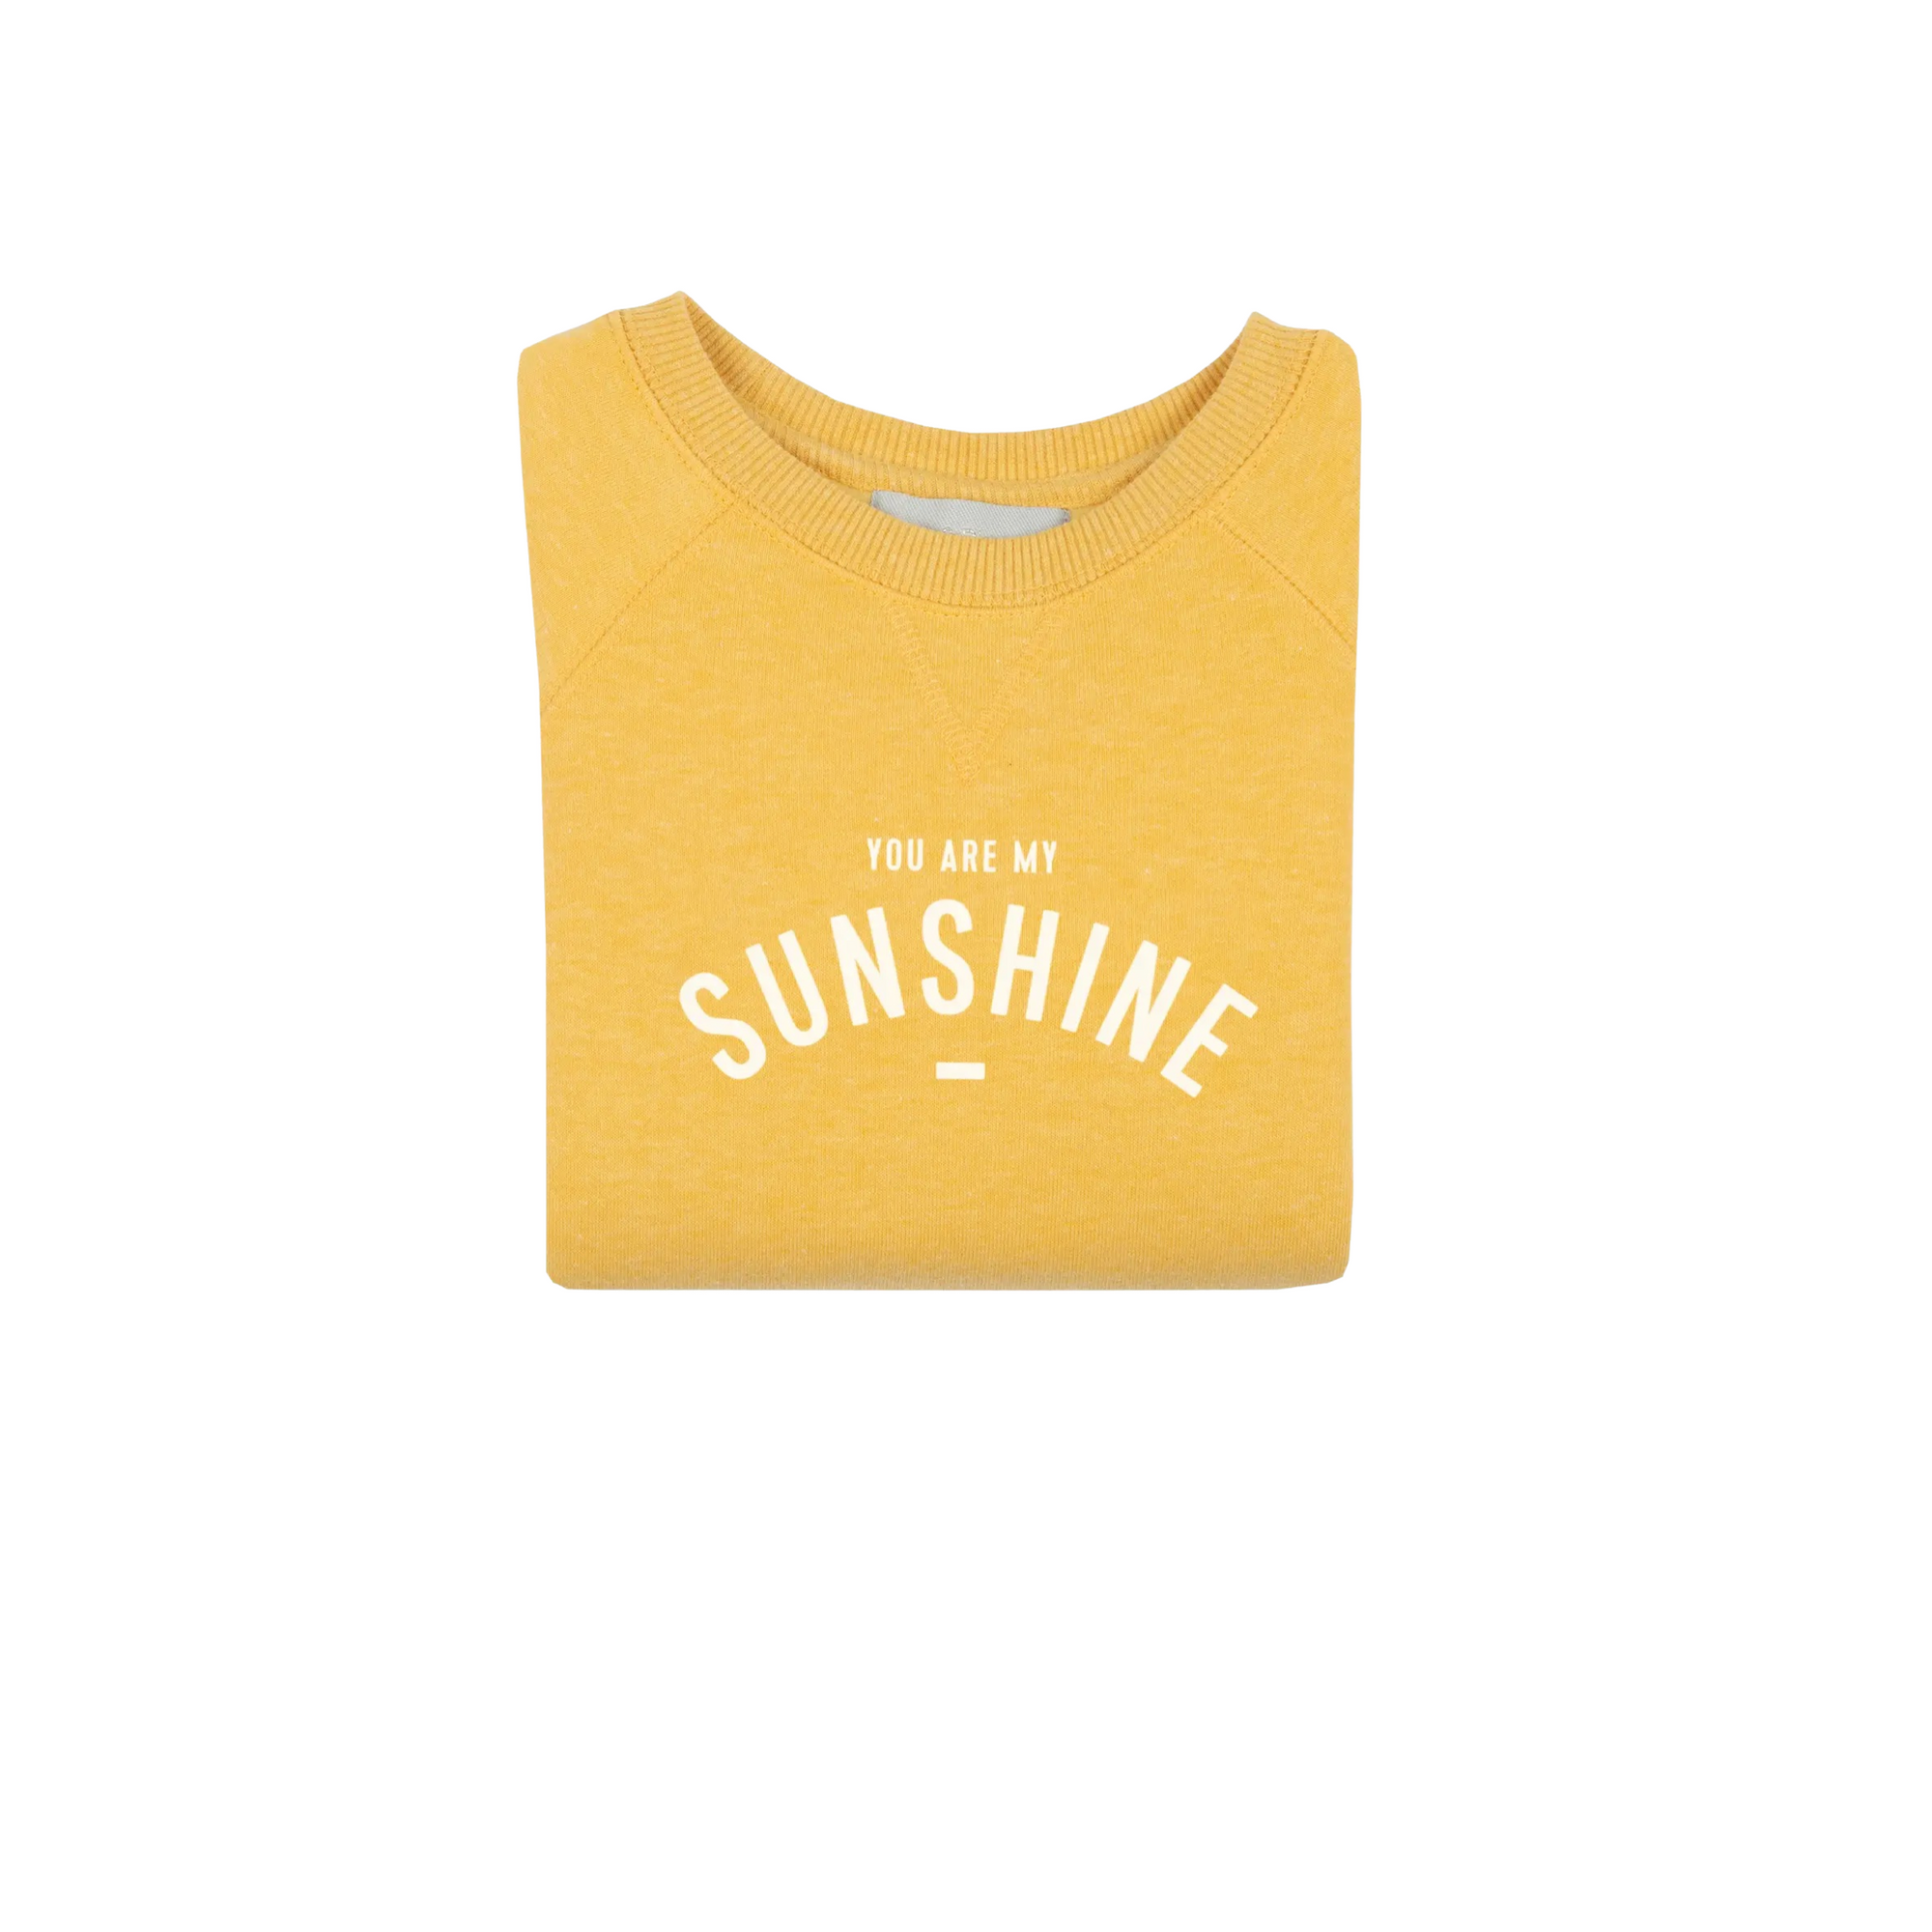 " You Are My Sunshine” Sweatshirt